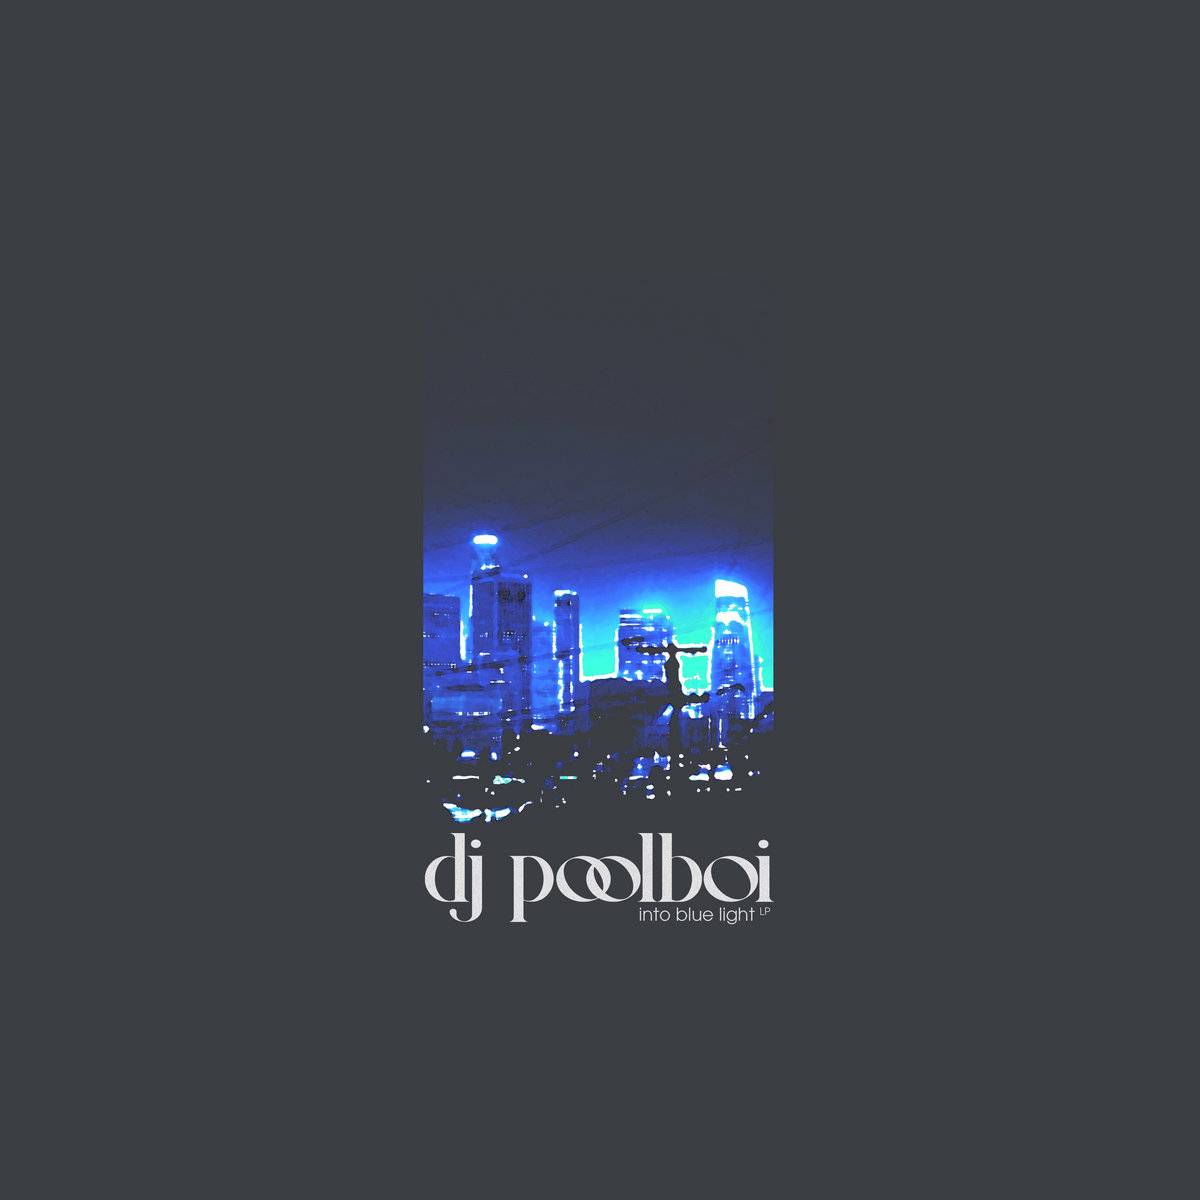 ALBUM: Dj Poolboi – into blue light lp